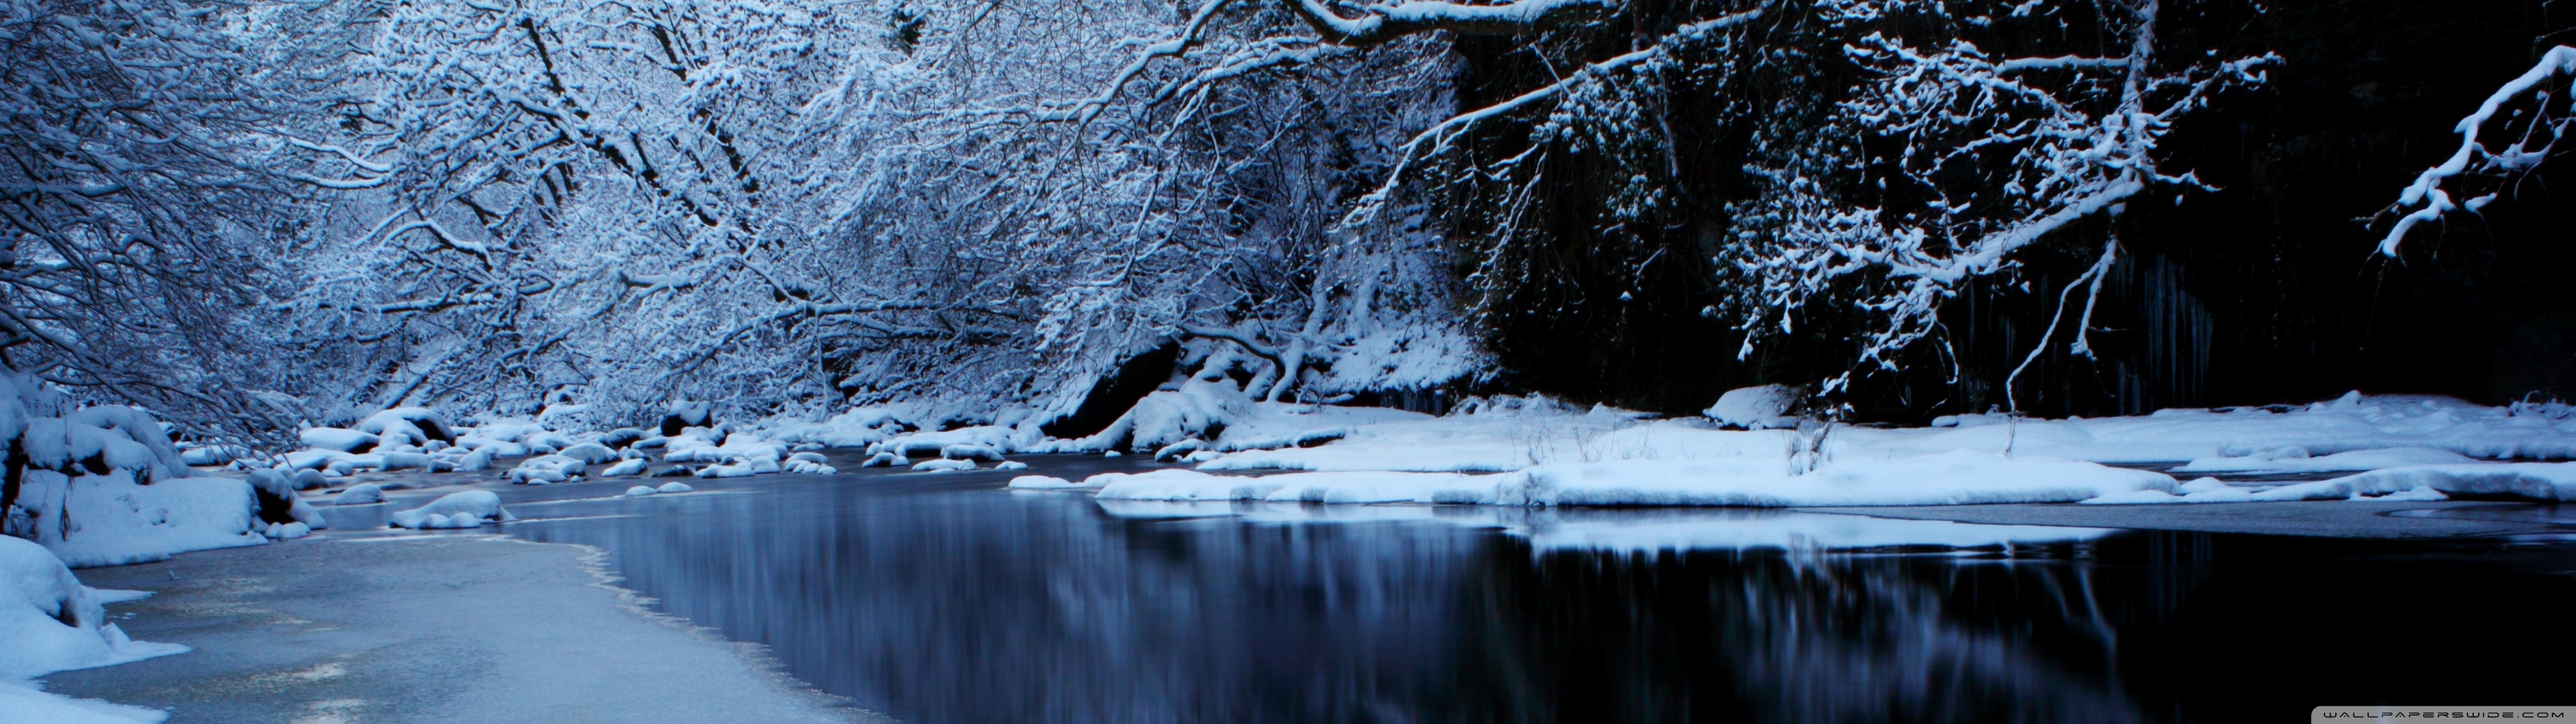 Forest River In Winter Ultra HD Desktop Background Wallpaper For